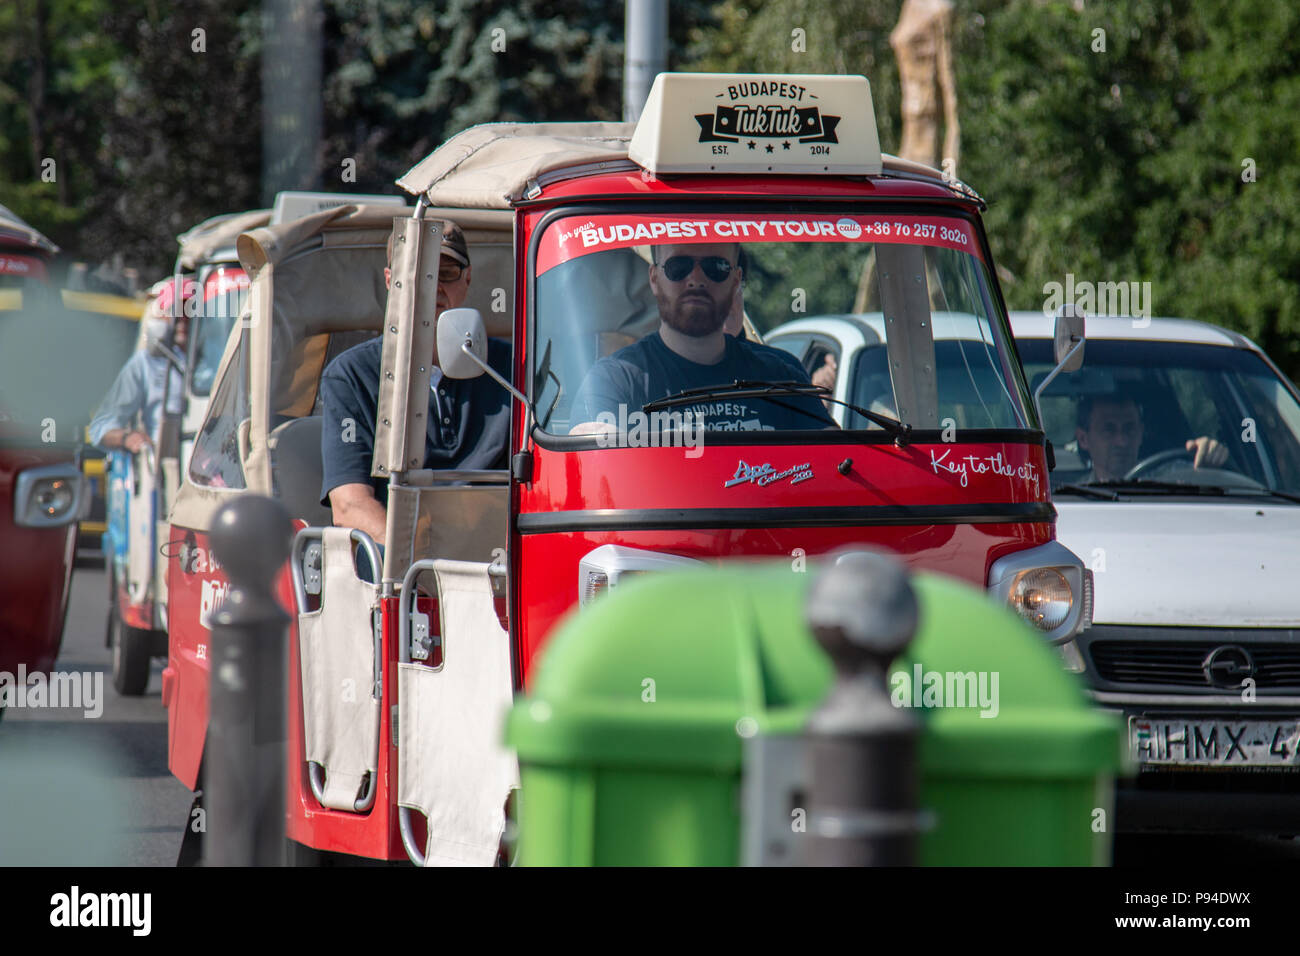 Tourists explore the European city of Budapest, Hungary while riding in tuk tuks. Stock Photo